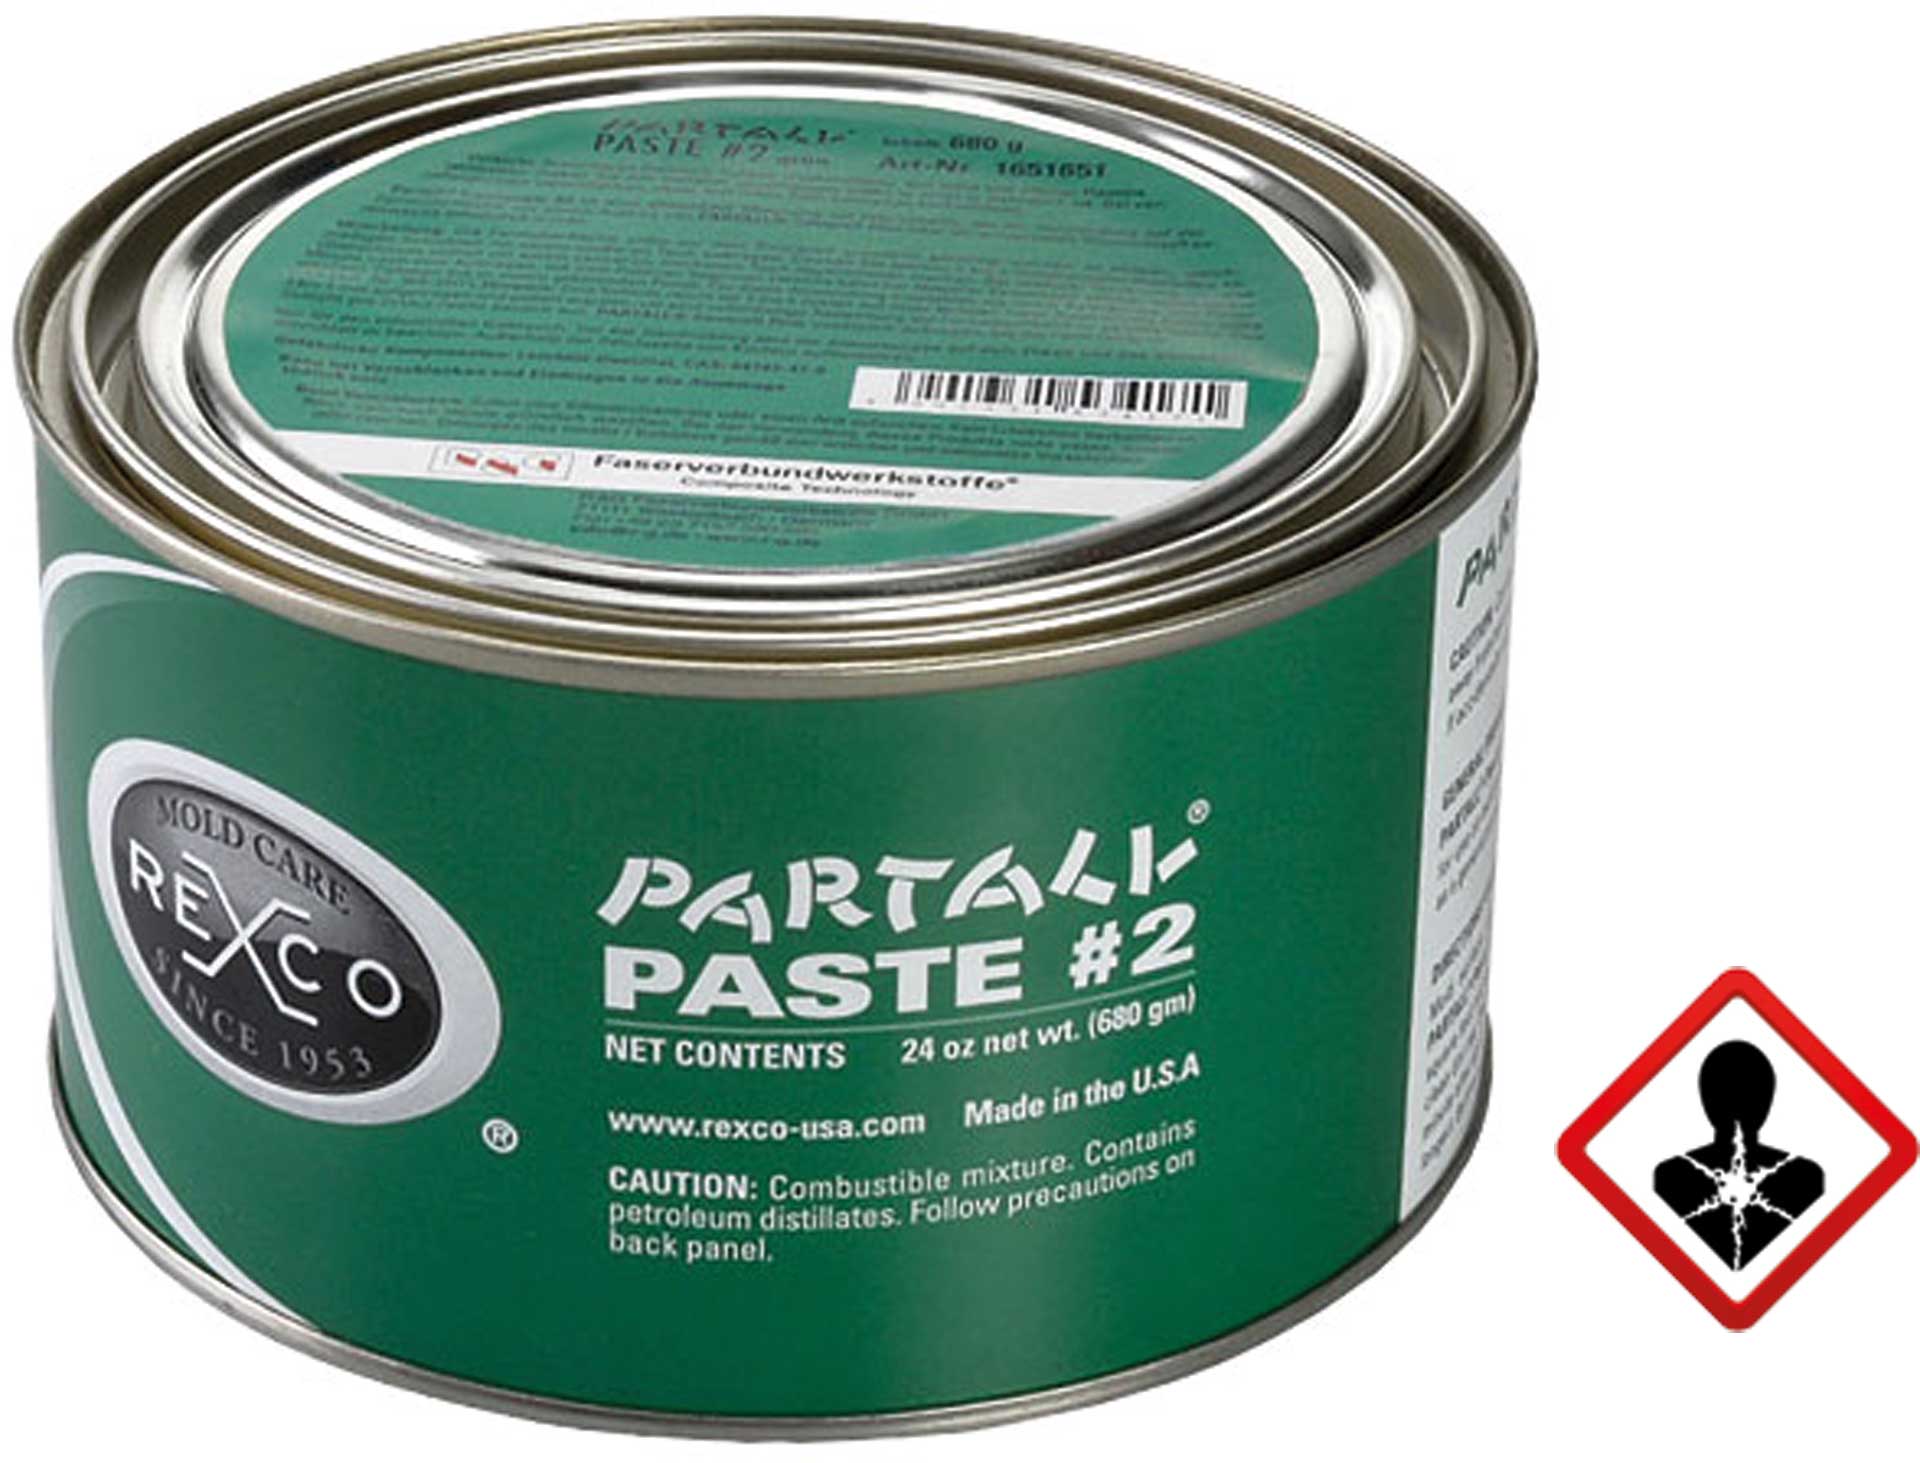 R&G Partall Trennpaste #2 farblos (REXCO) Dose/ 680 g